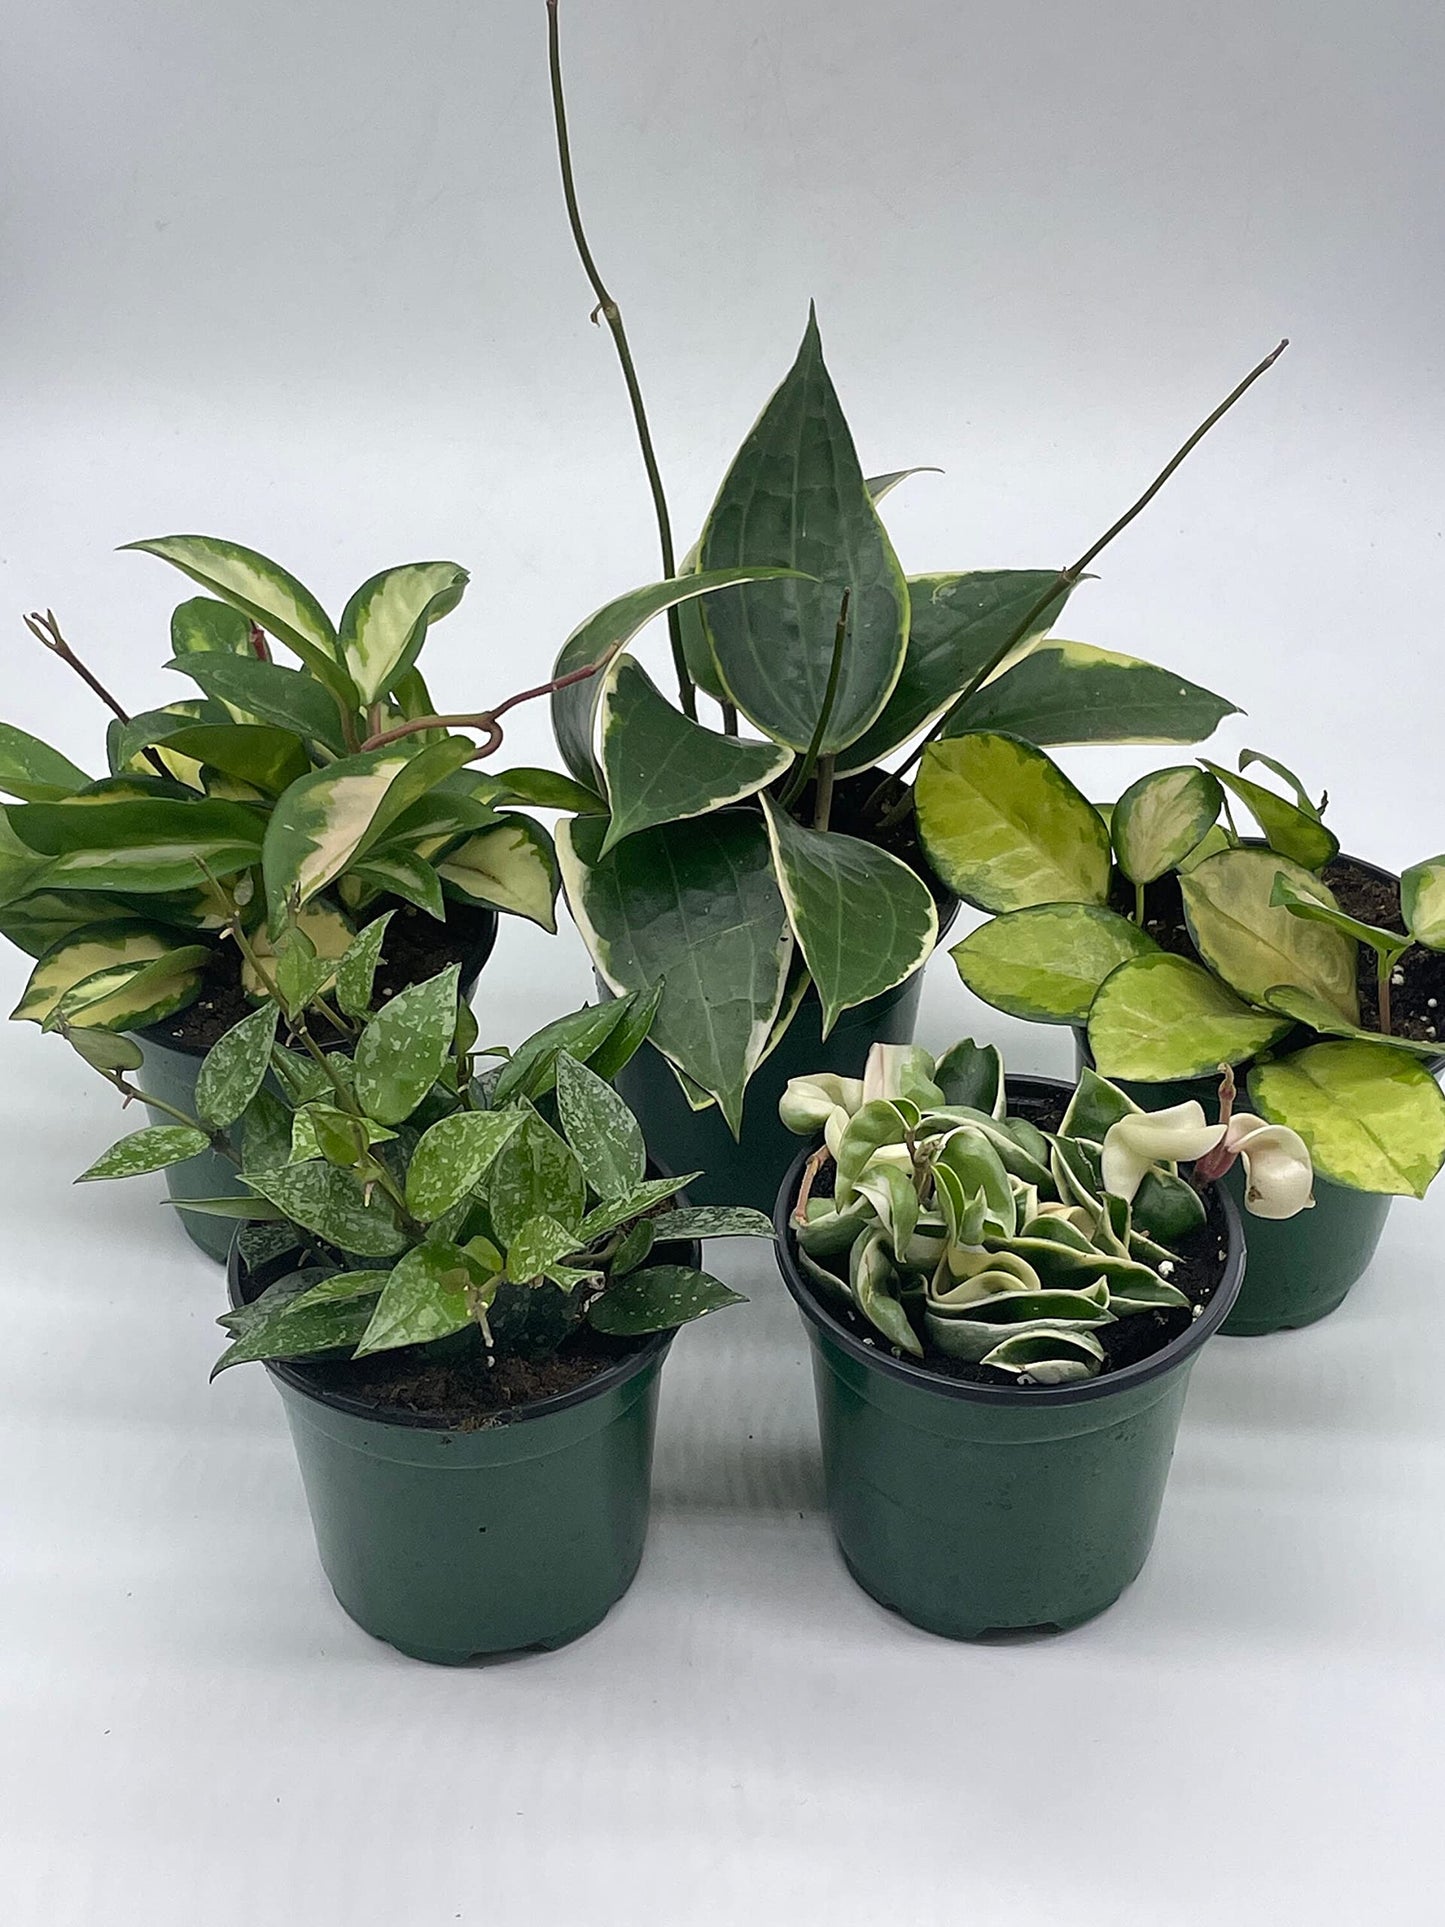 Variegated Hoya Assortment Set, Hindu Rope, Wayetii, Australis, Macrophylla, Krimson Princess, Premium Collector's Gift, in 4 inch pots